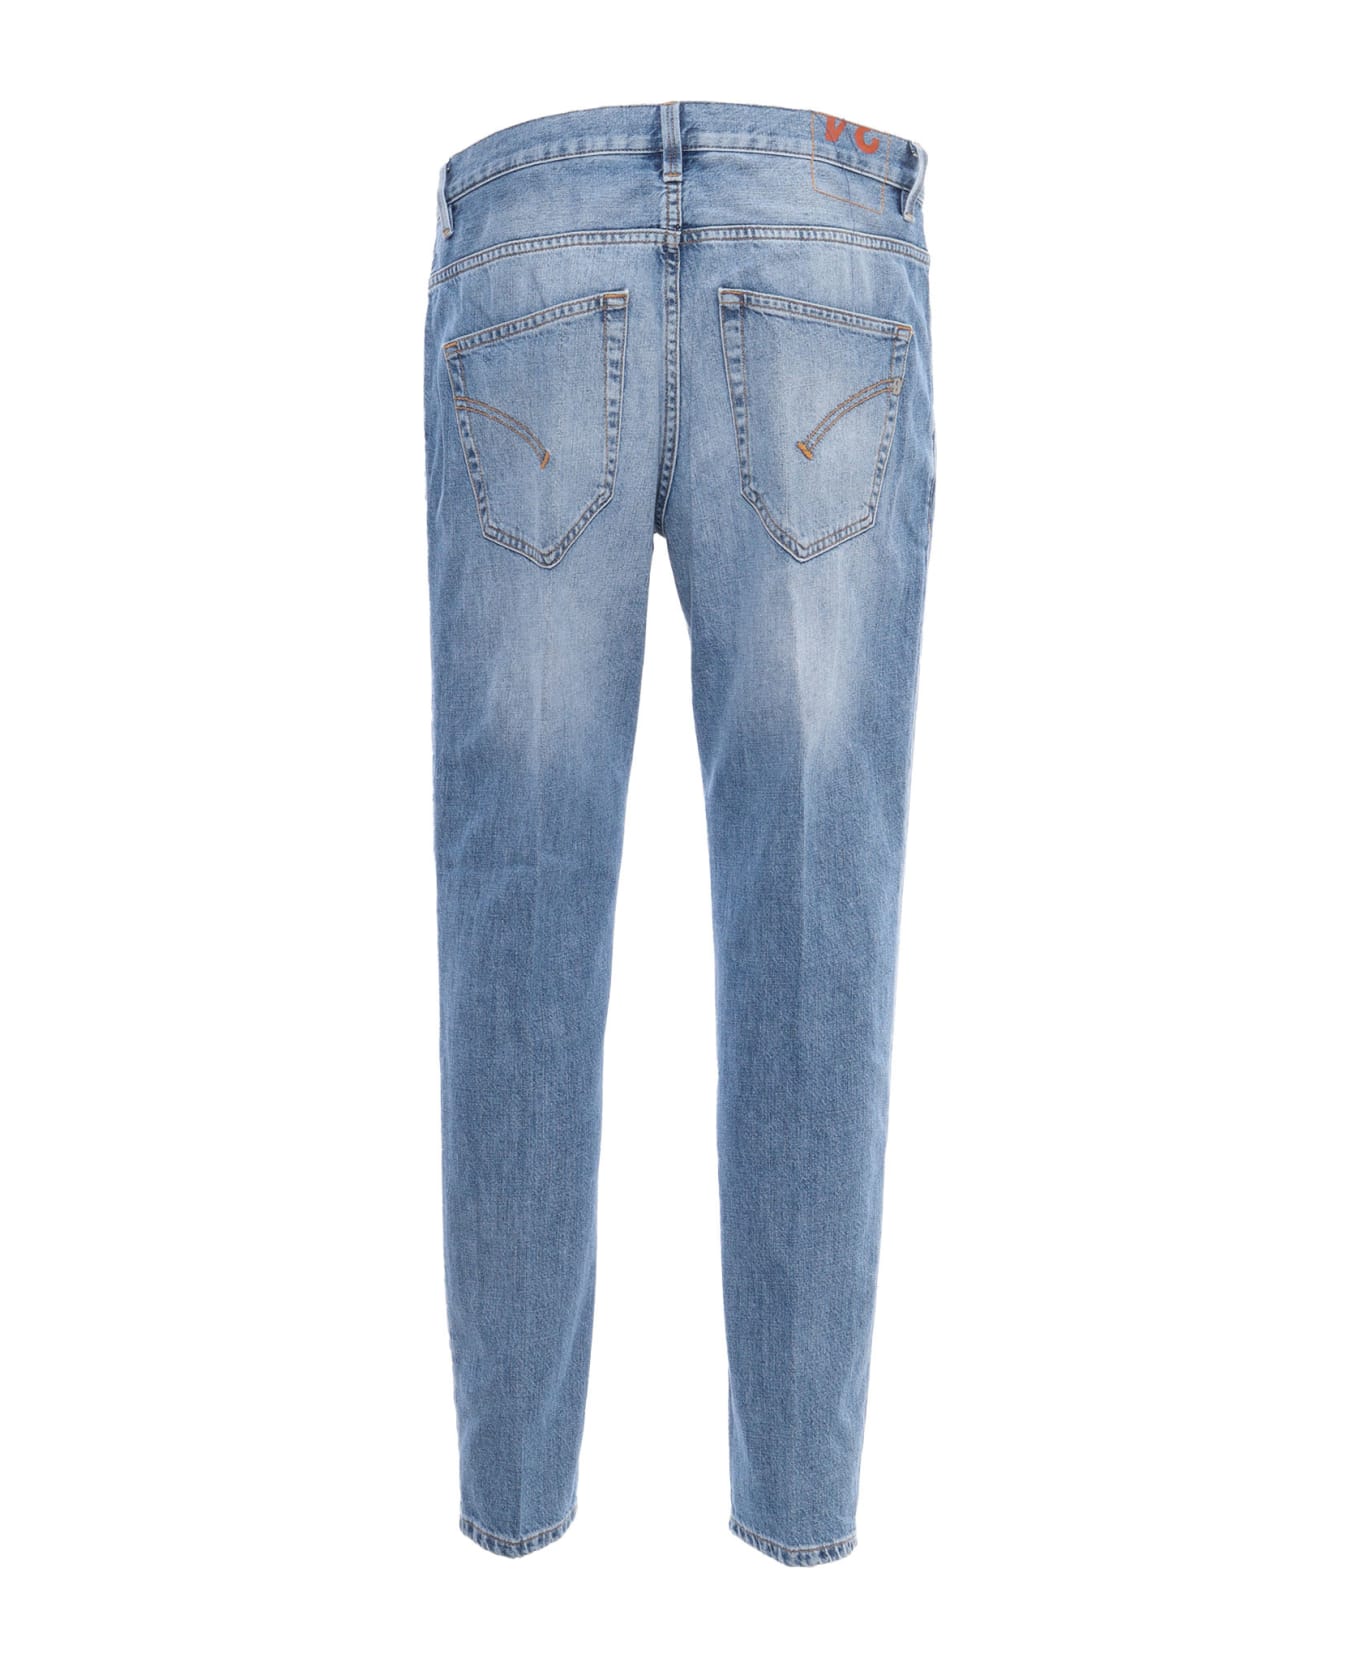 Dondup Washed Effect Jeans - Blu デニム